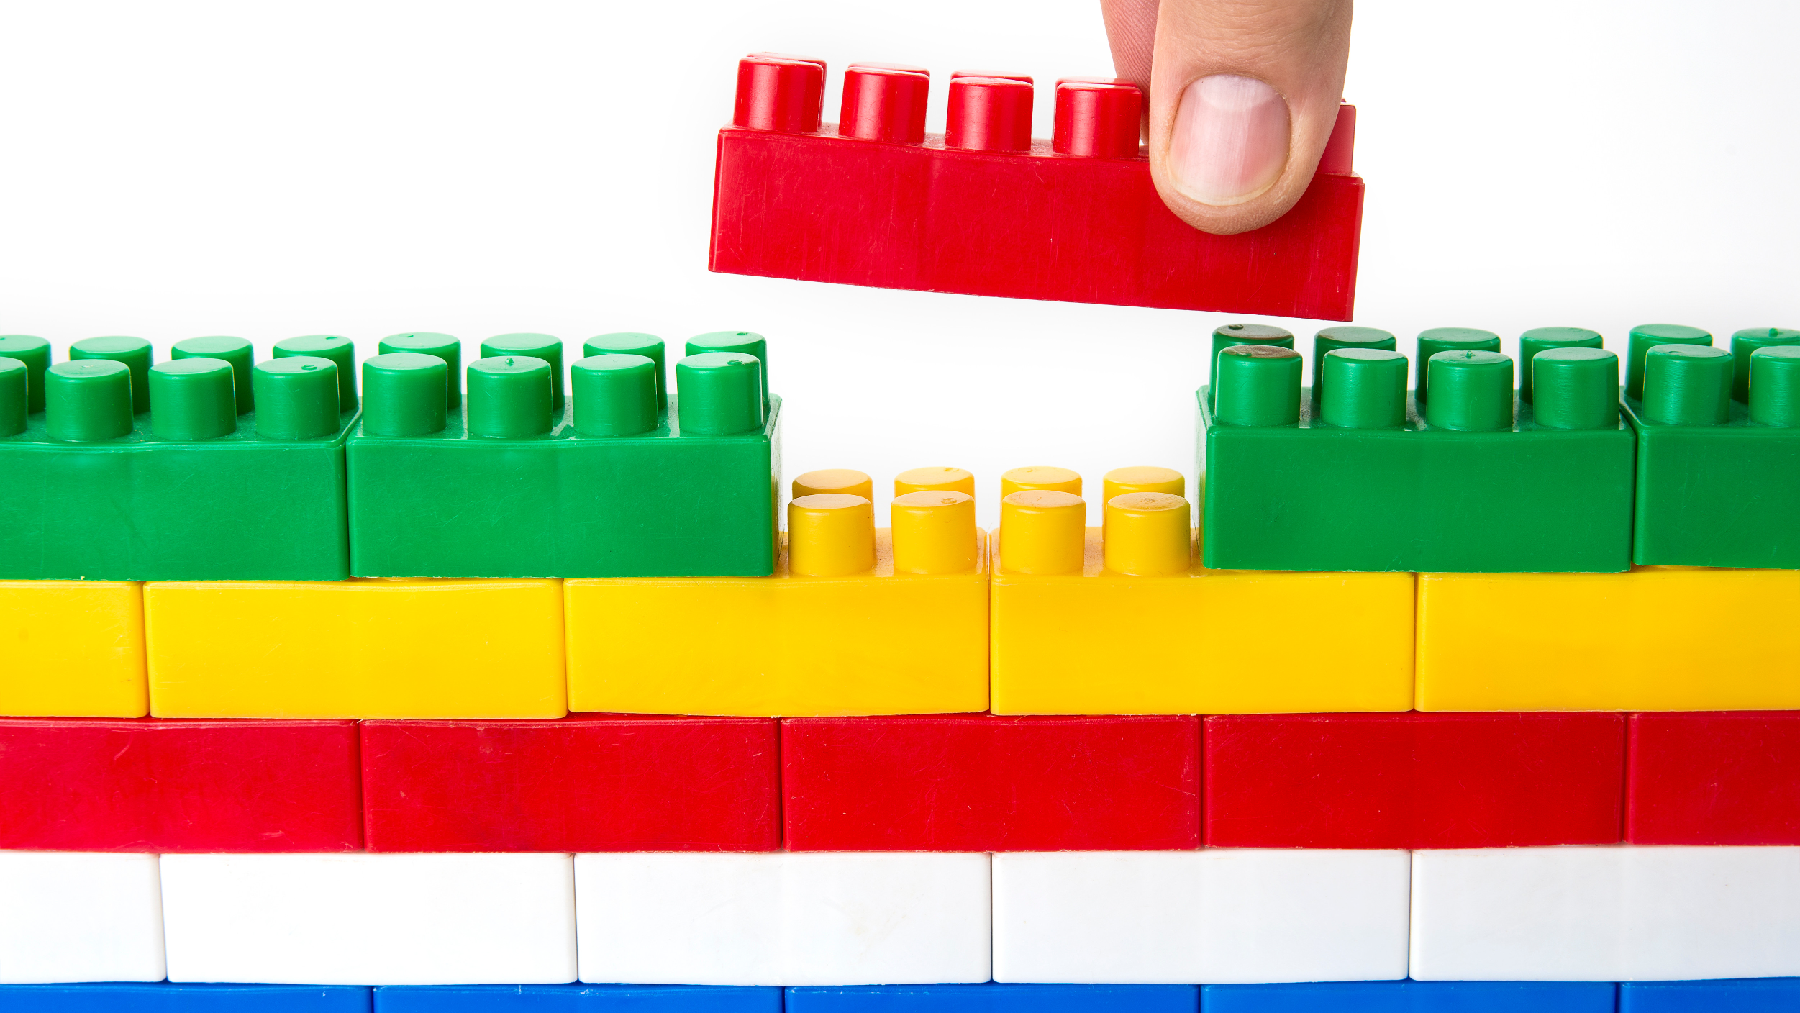 An image of multi-colored lego bricks